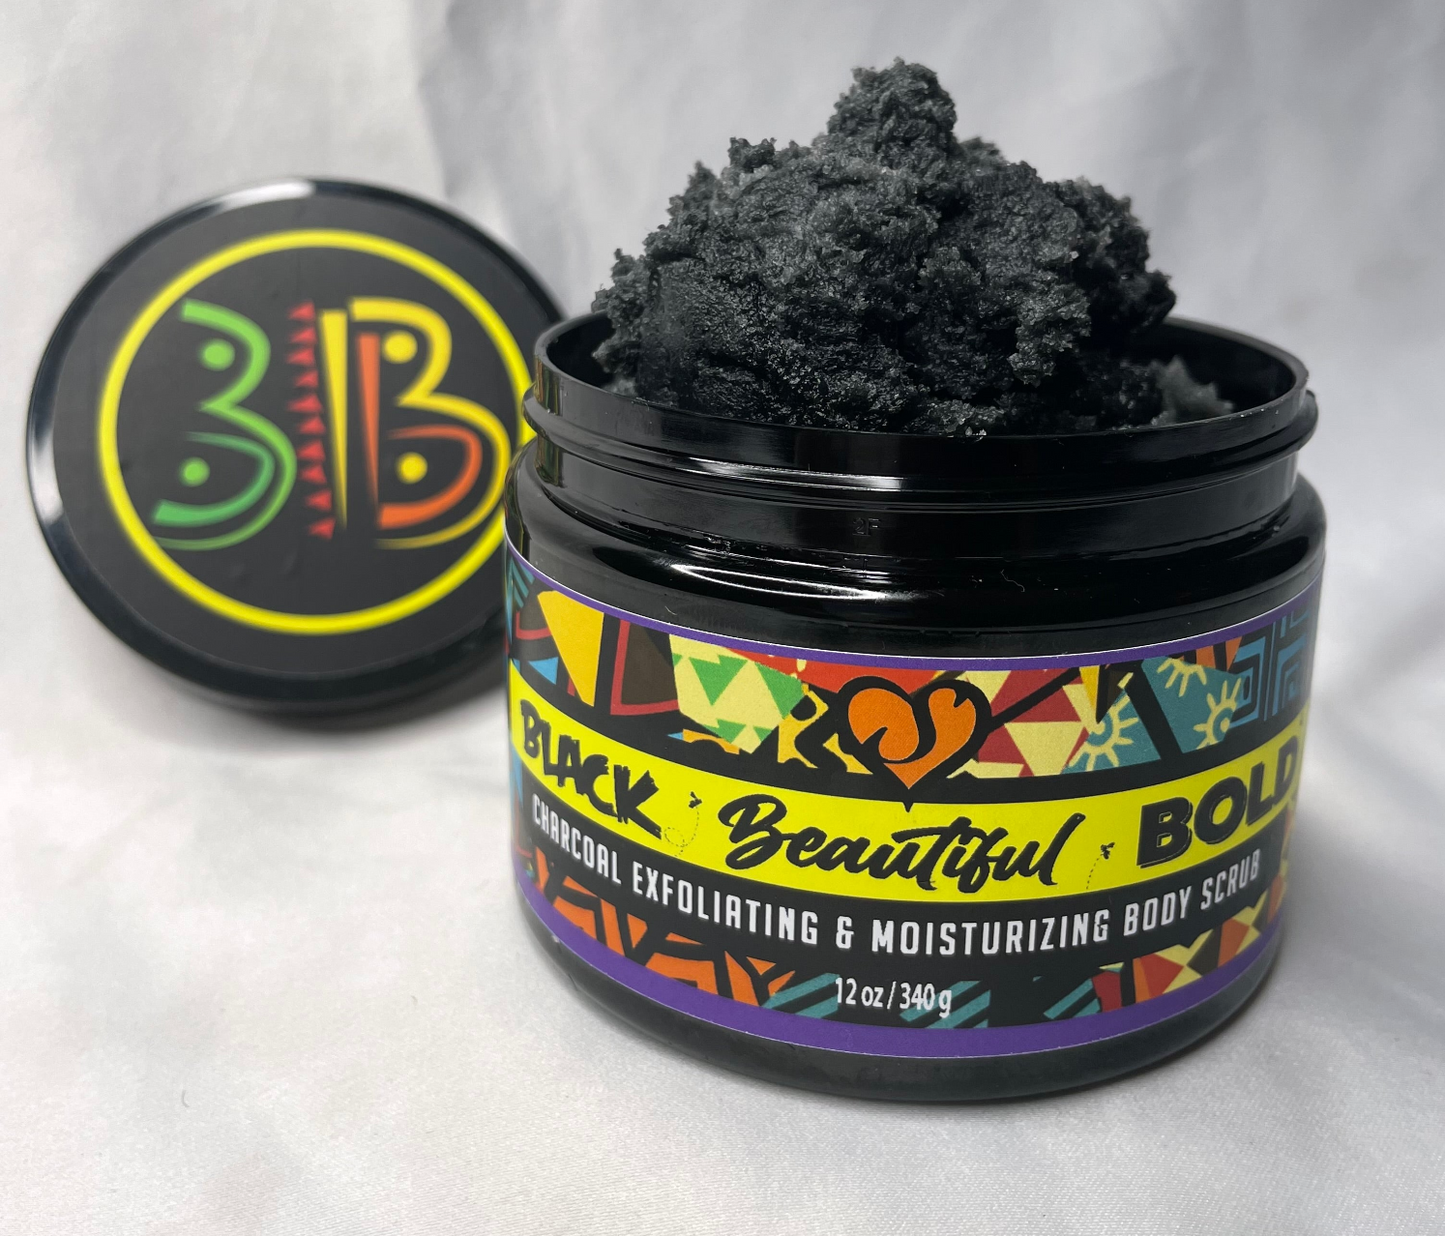 Black Beautiful Bold (3B's) Body Scrub